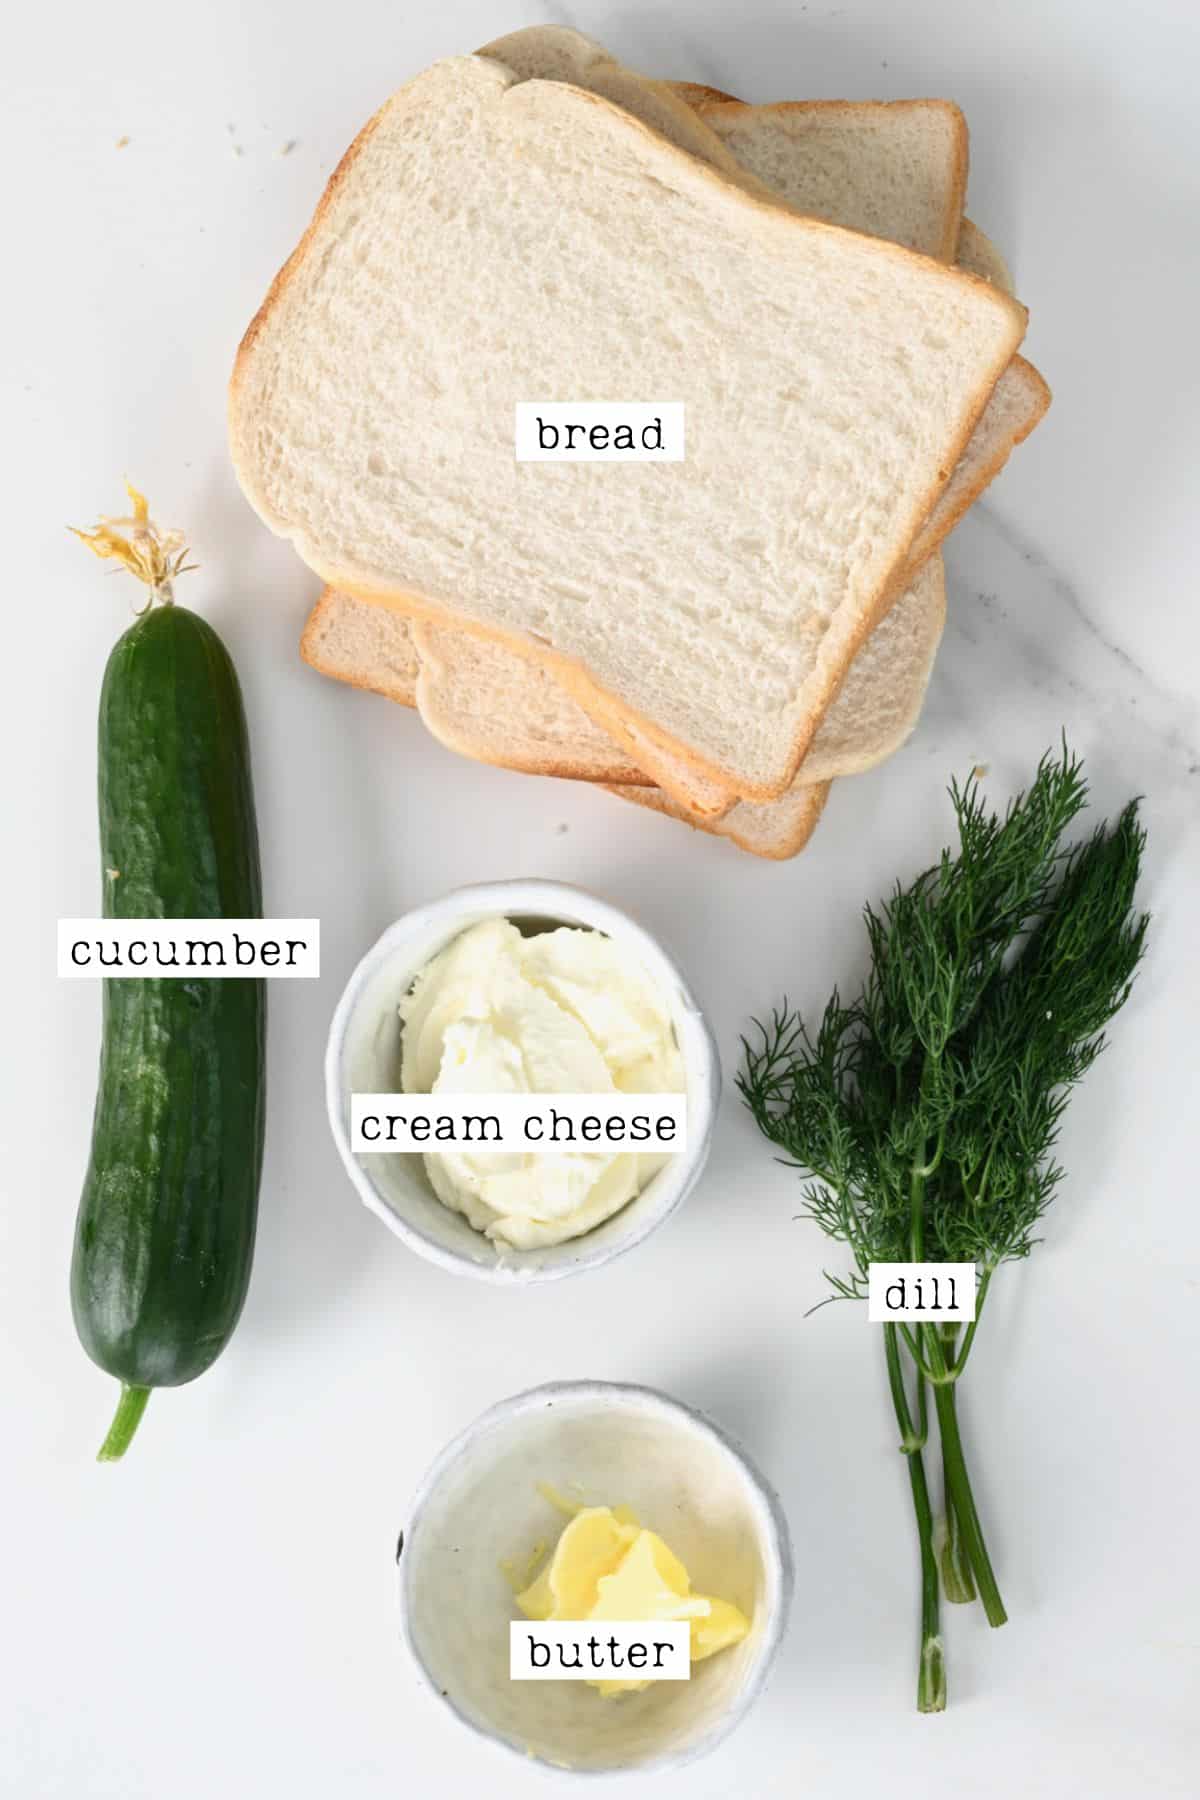 Ingredients for cucumber sandwich